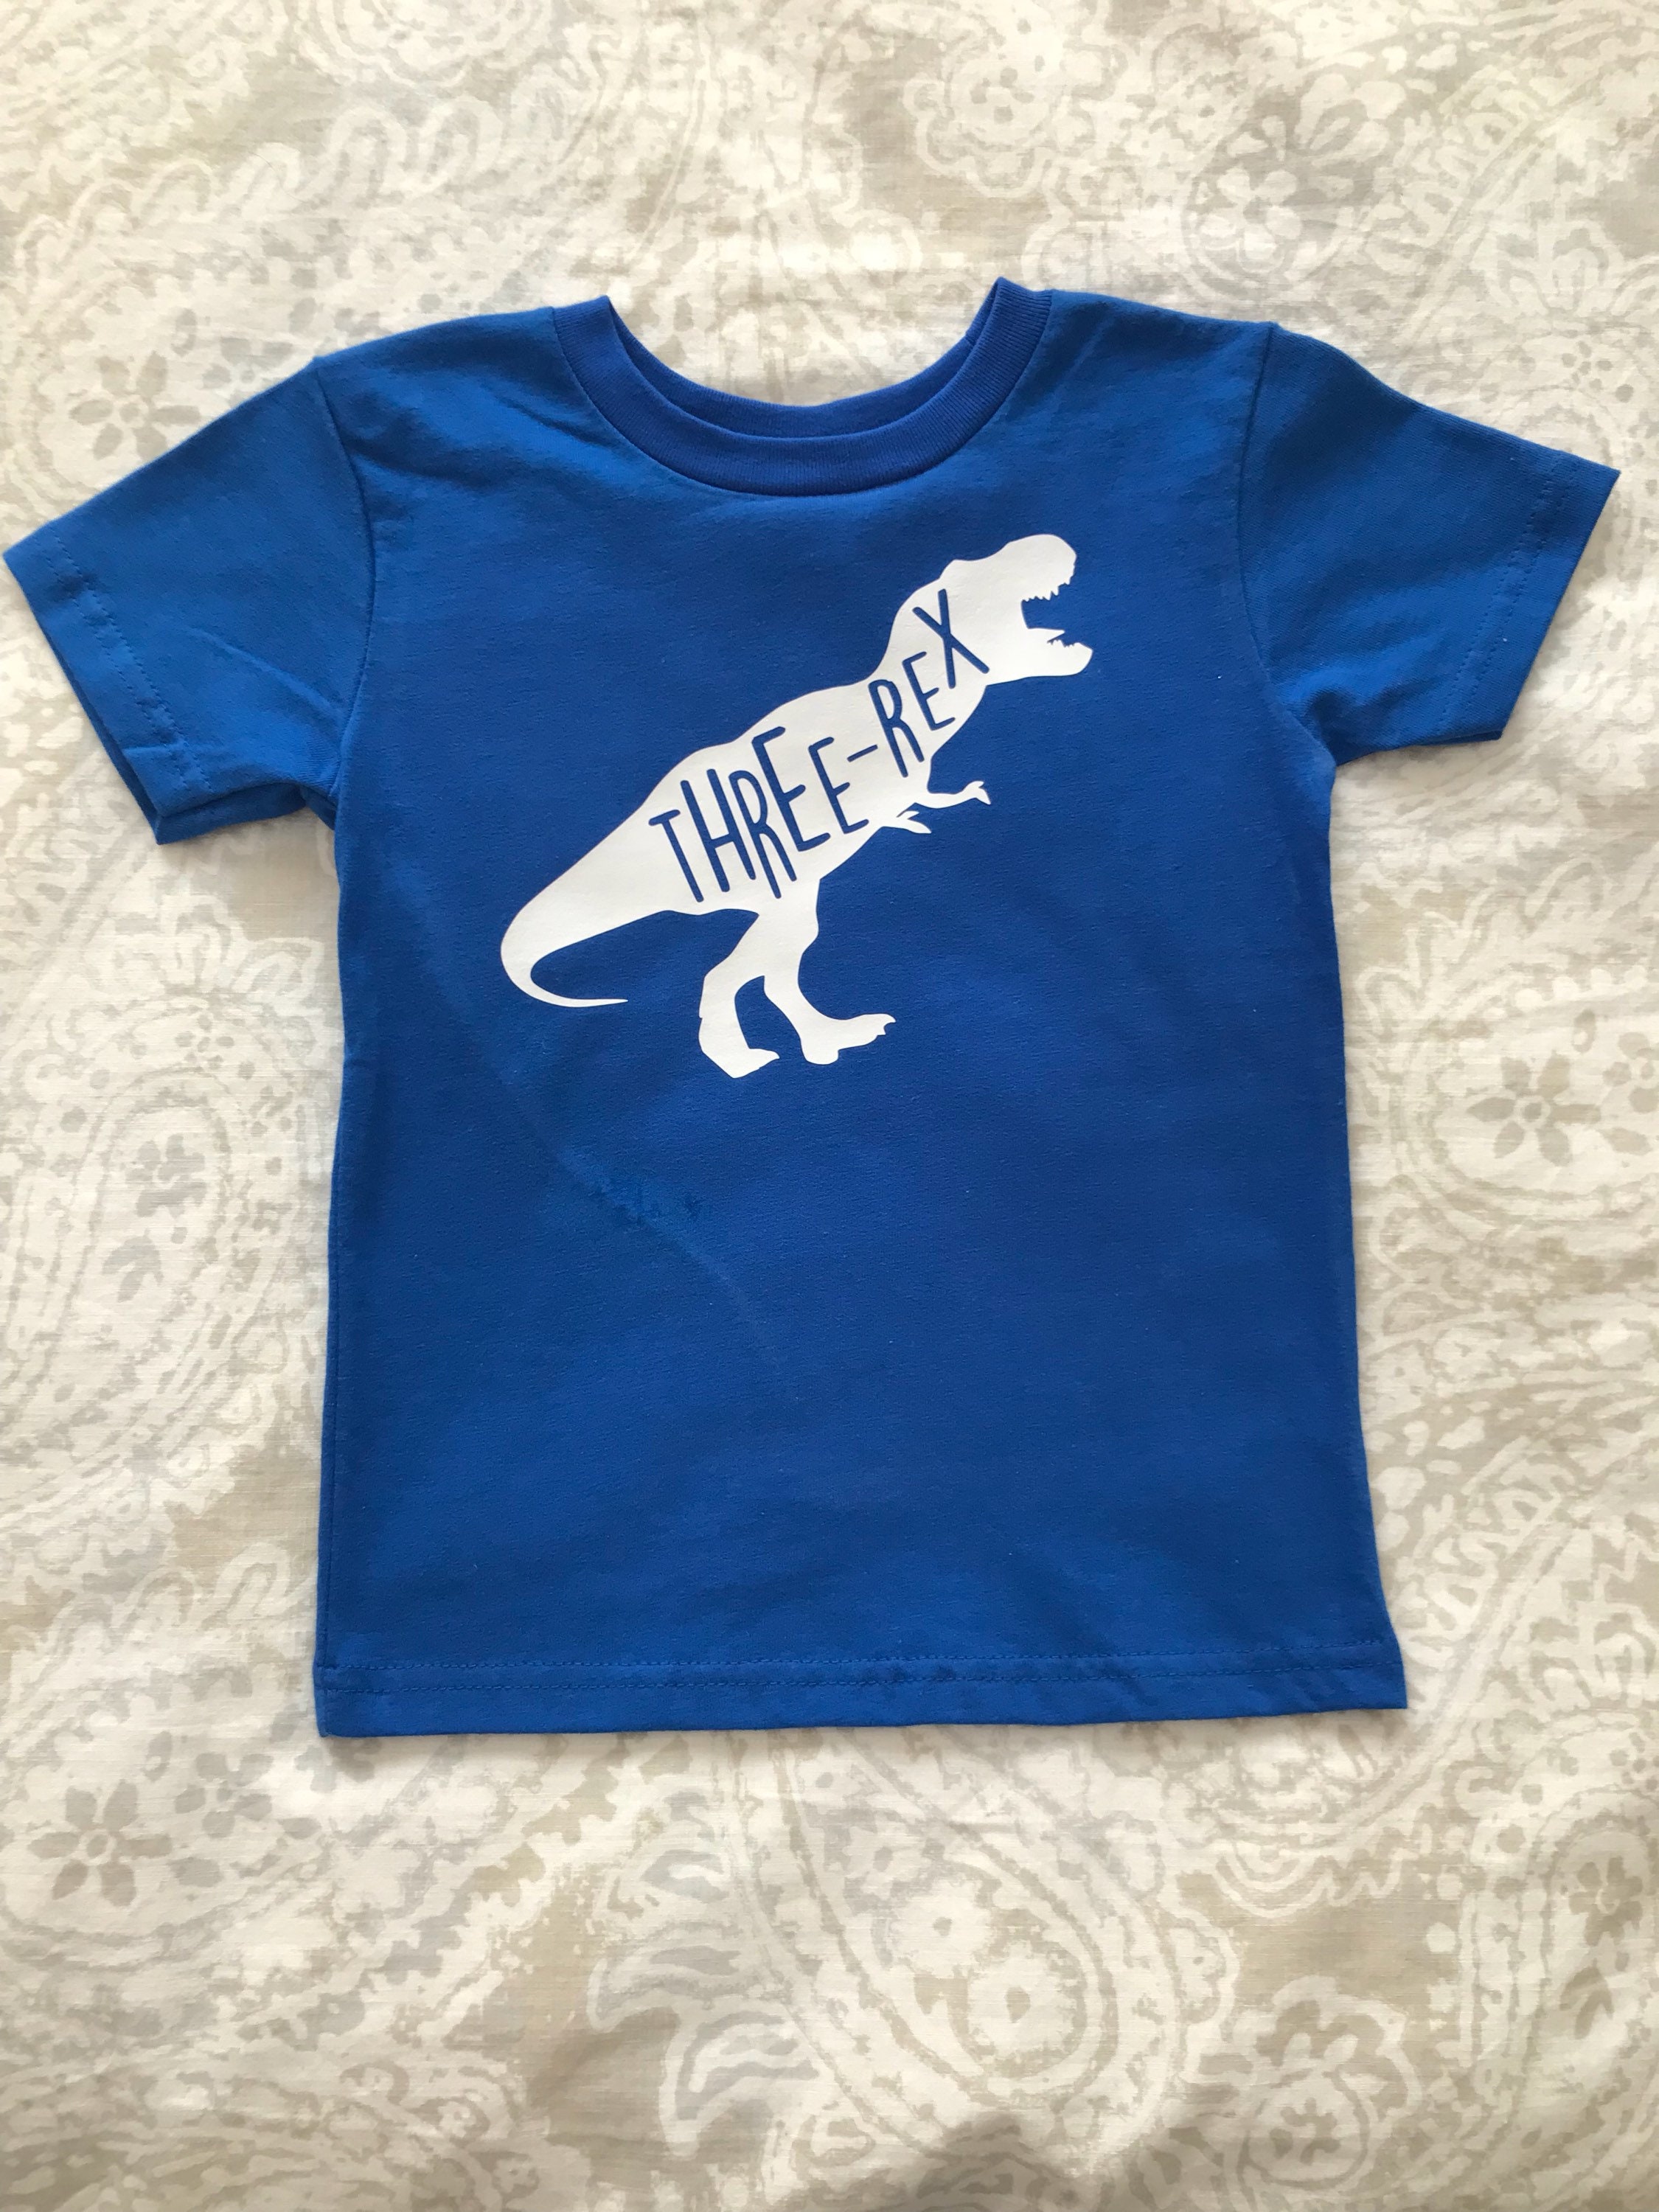 Third Birthday Shirt/Three Rex Shirt/Kids 3rd | Etsy